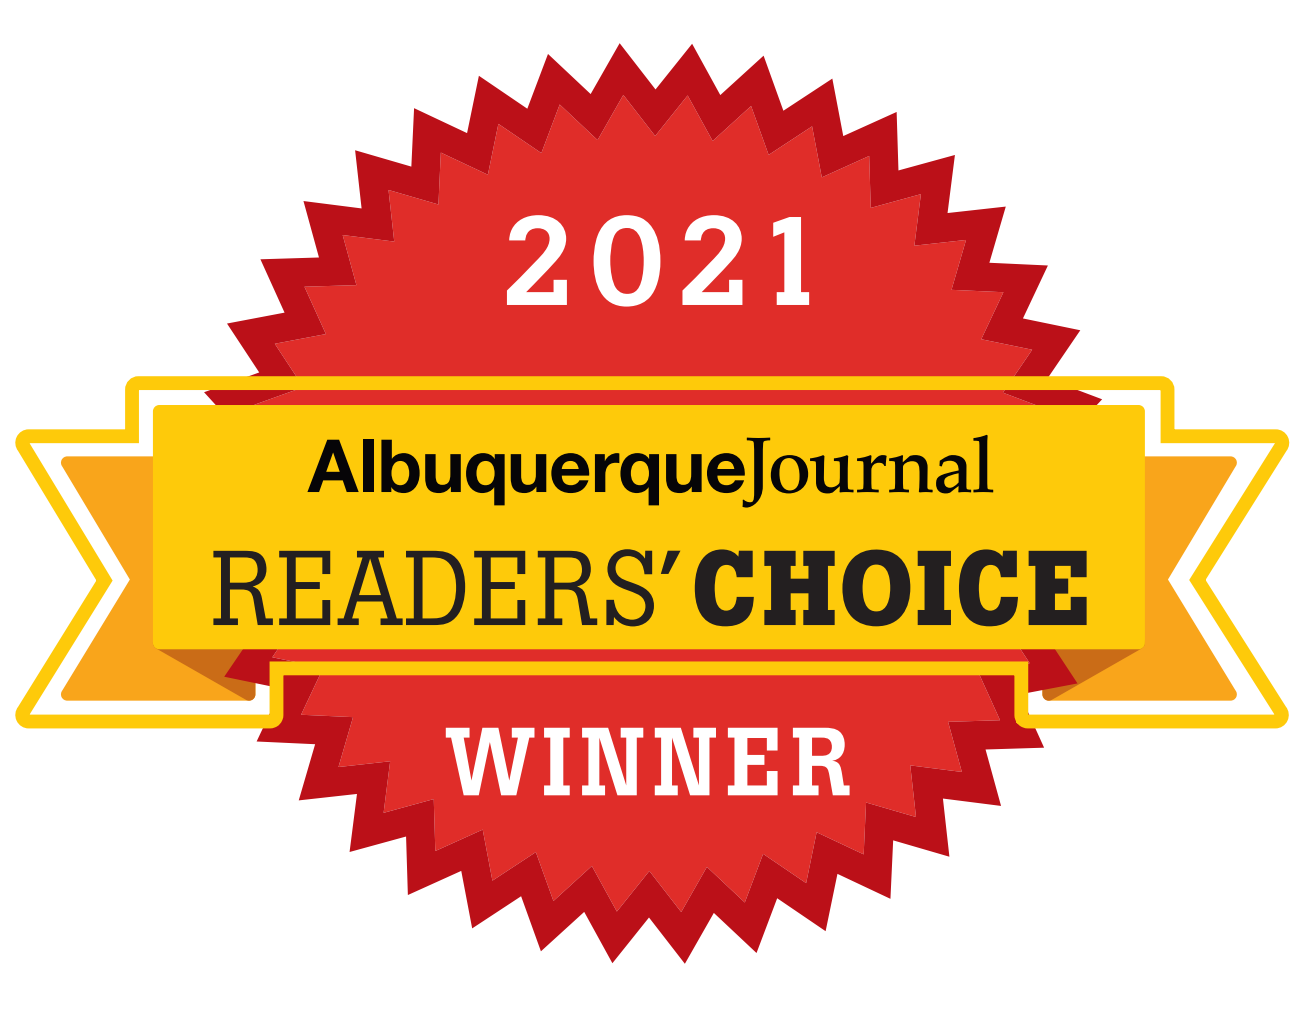 Reader's Choice Winner 2021